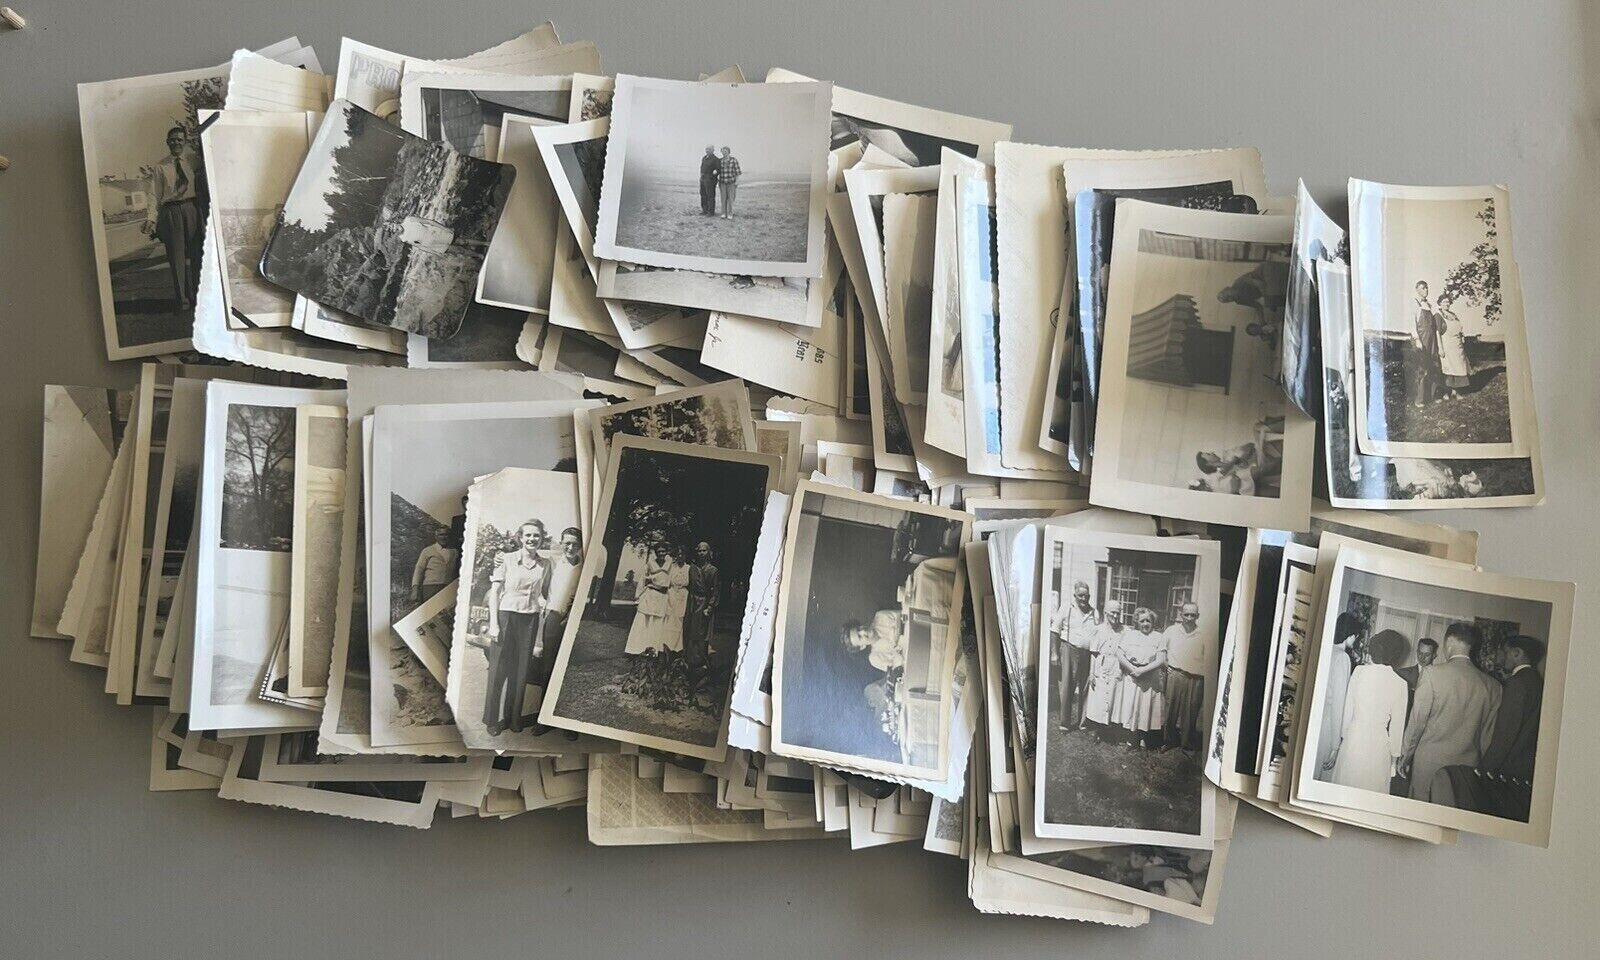 LOT OF 50 ORIGINAL RANDOM FOUND OLD PHOTOGRAPHS B&W SEPIA VINTAGE SNAPSHOTS